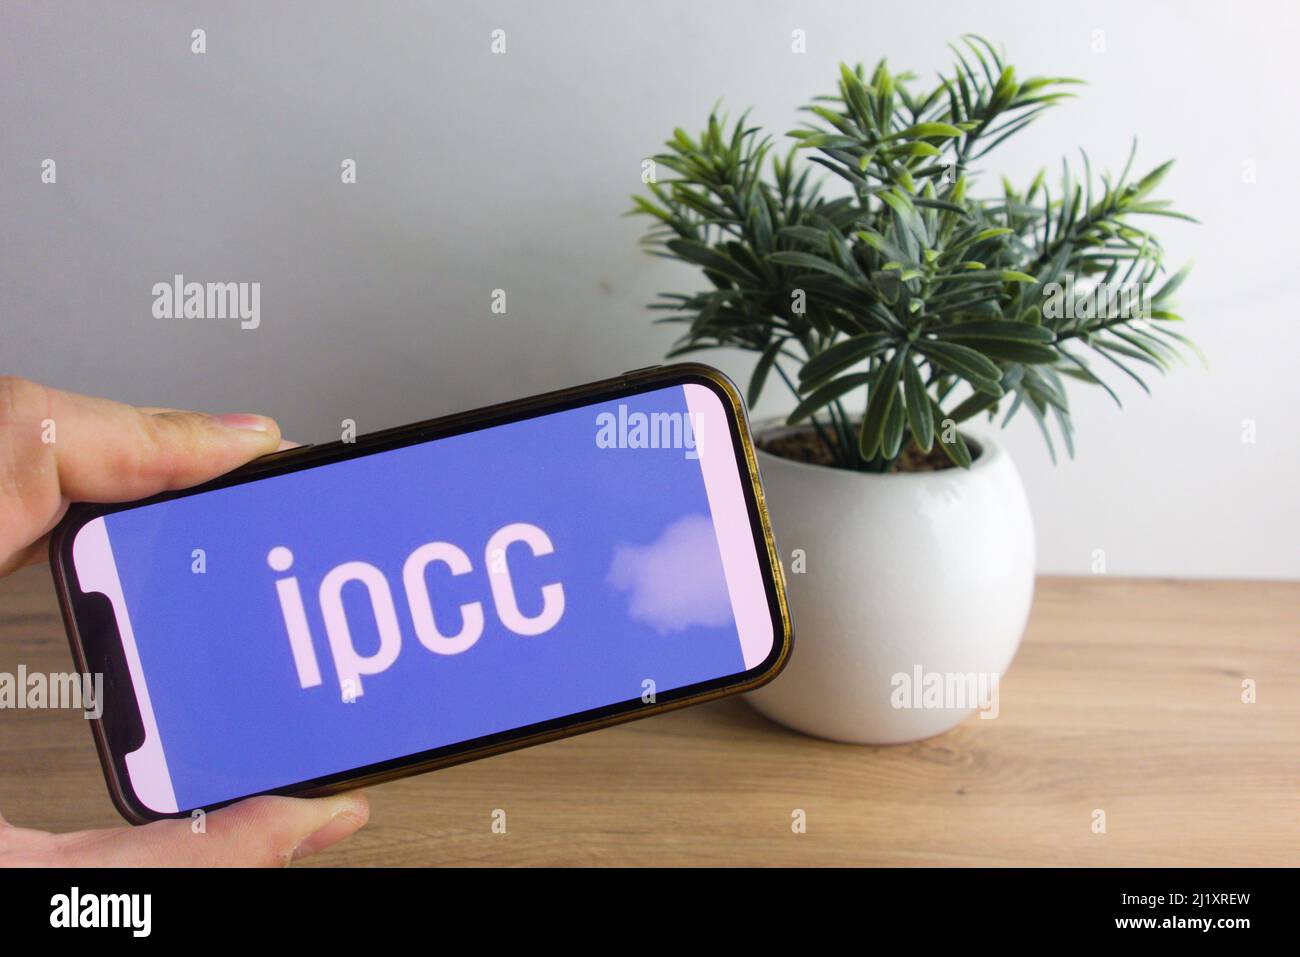 KONSKIE, POLAND - March 26, 2022: IPCC - Intergovernmental Panel on Climate Change logo displayed on mobile phone Stock Photo